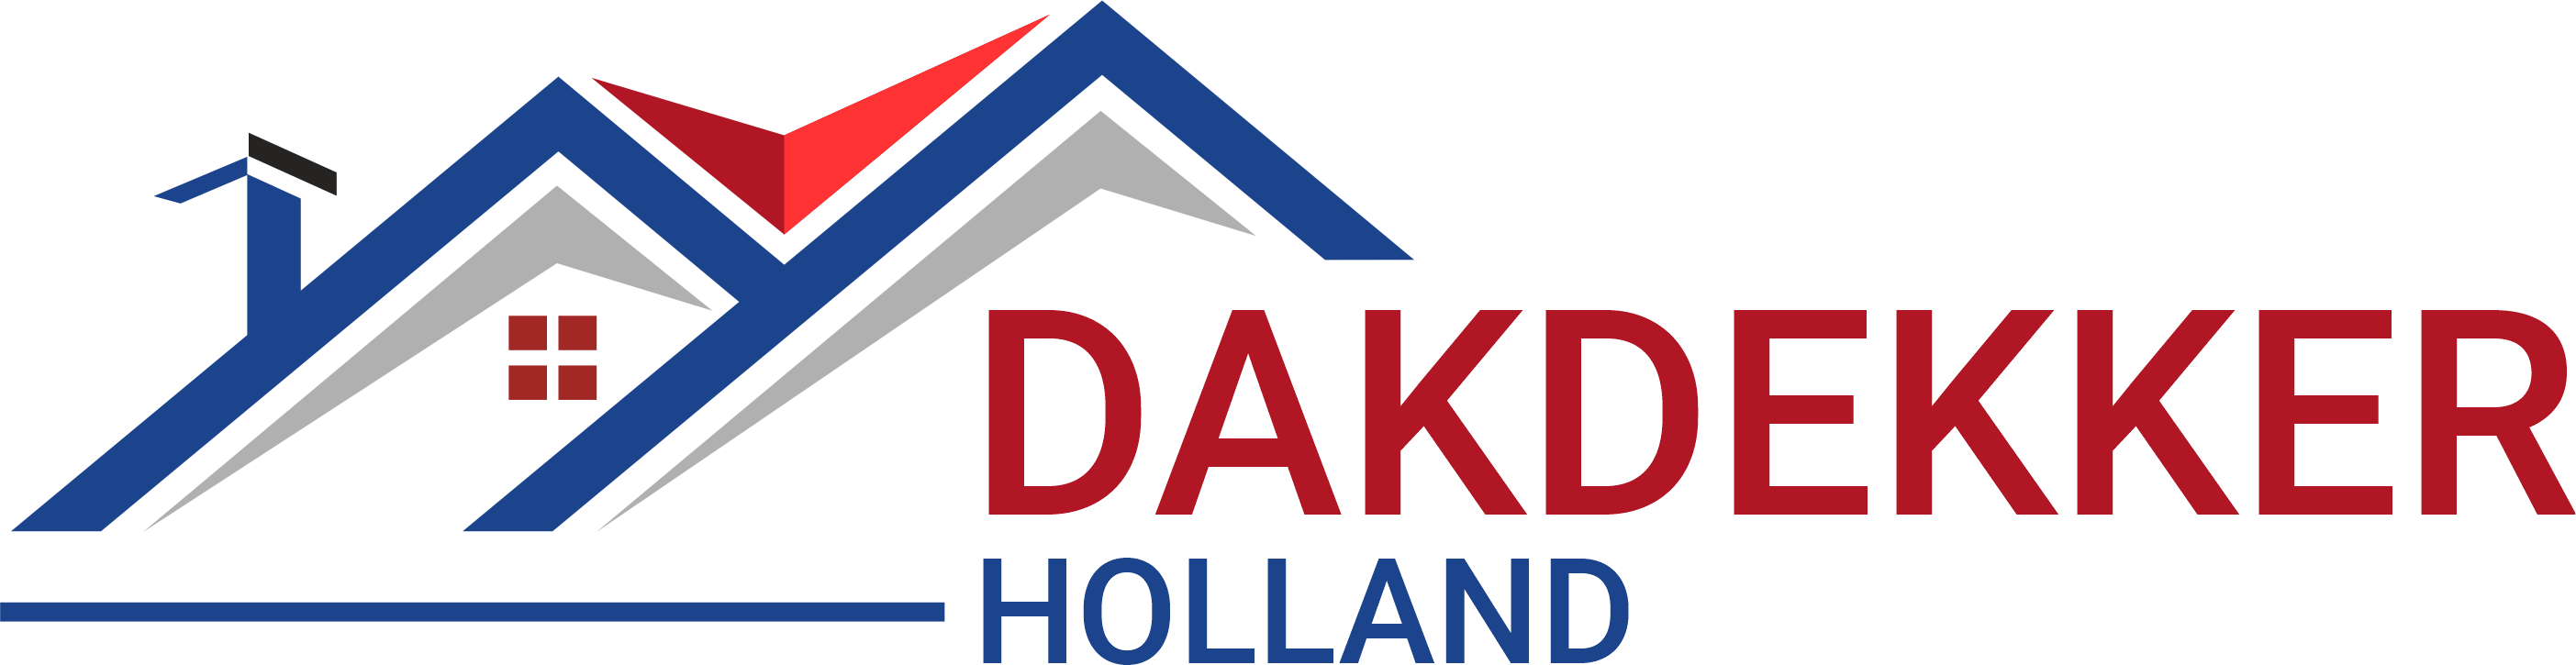 Dakdekker Holland - Amsterdam logo